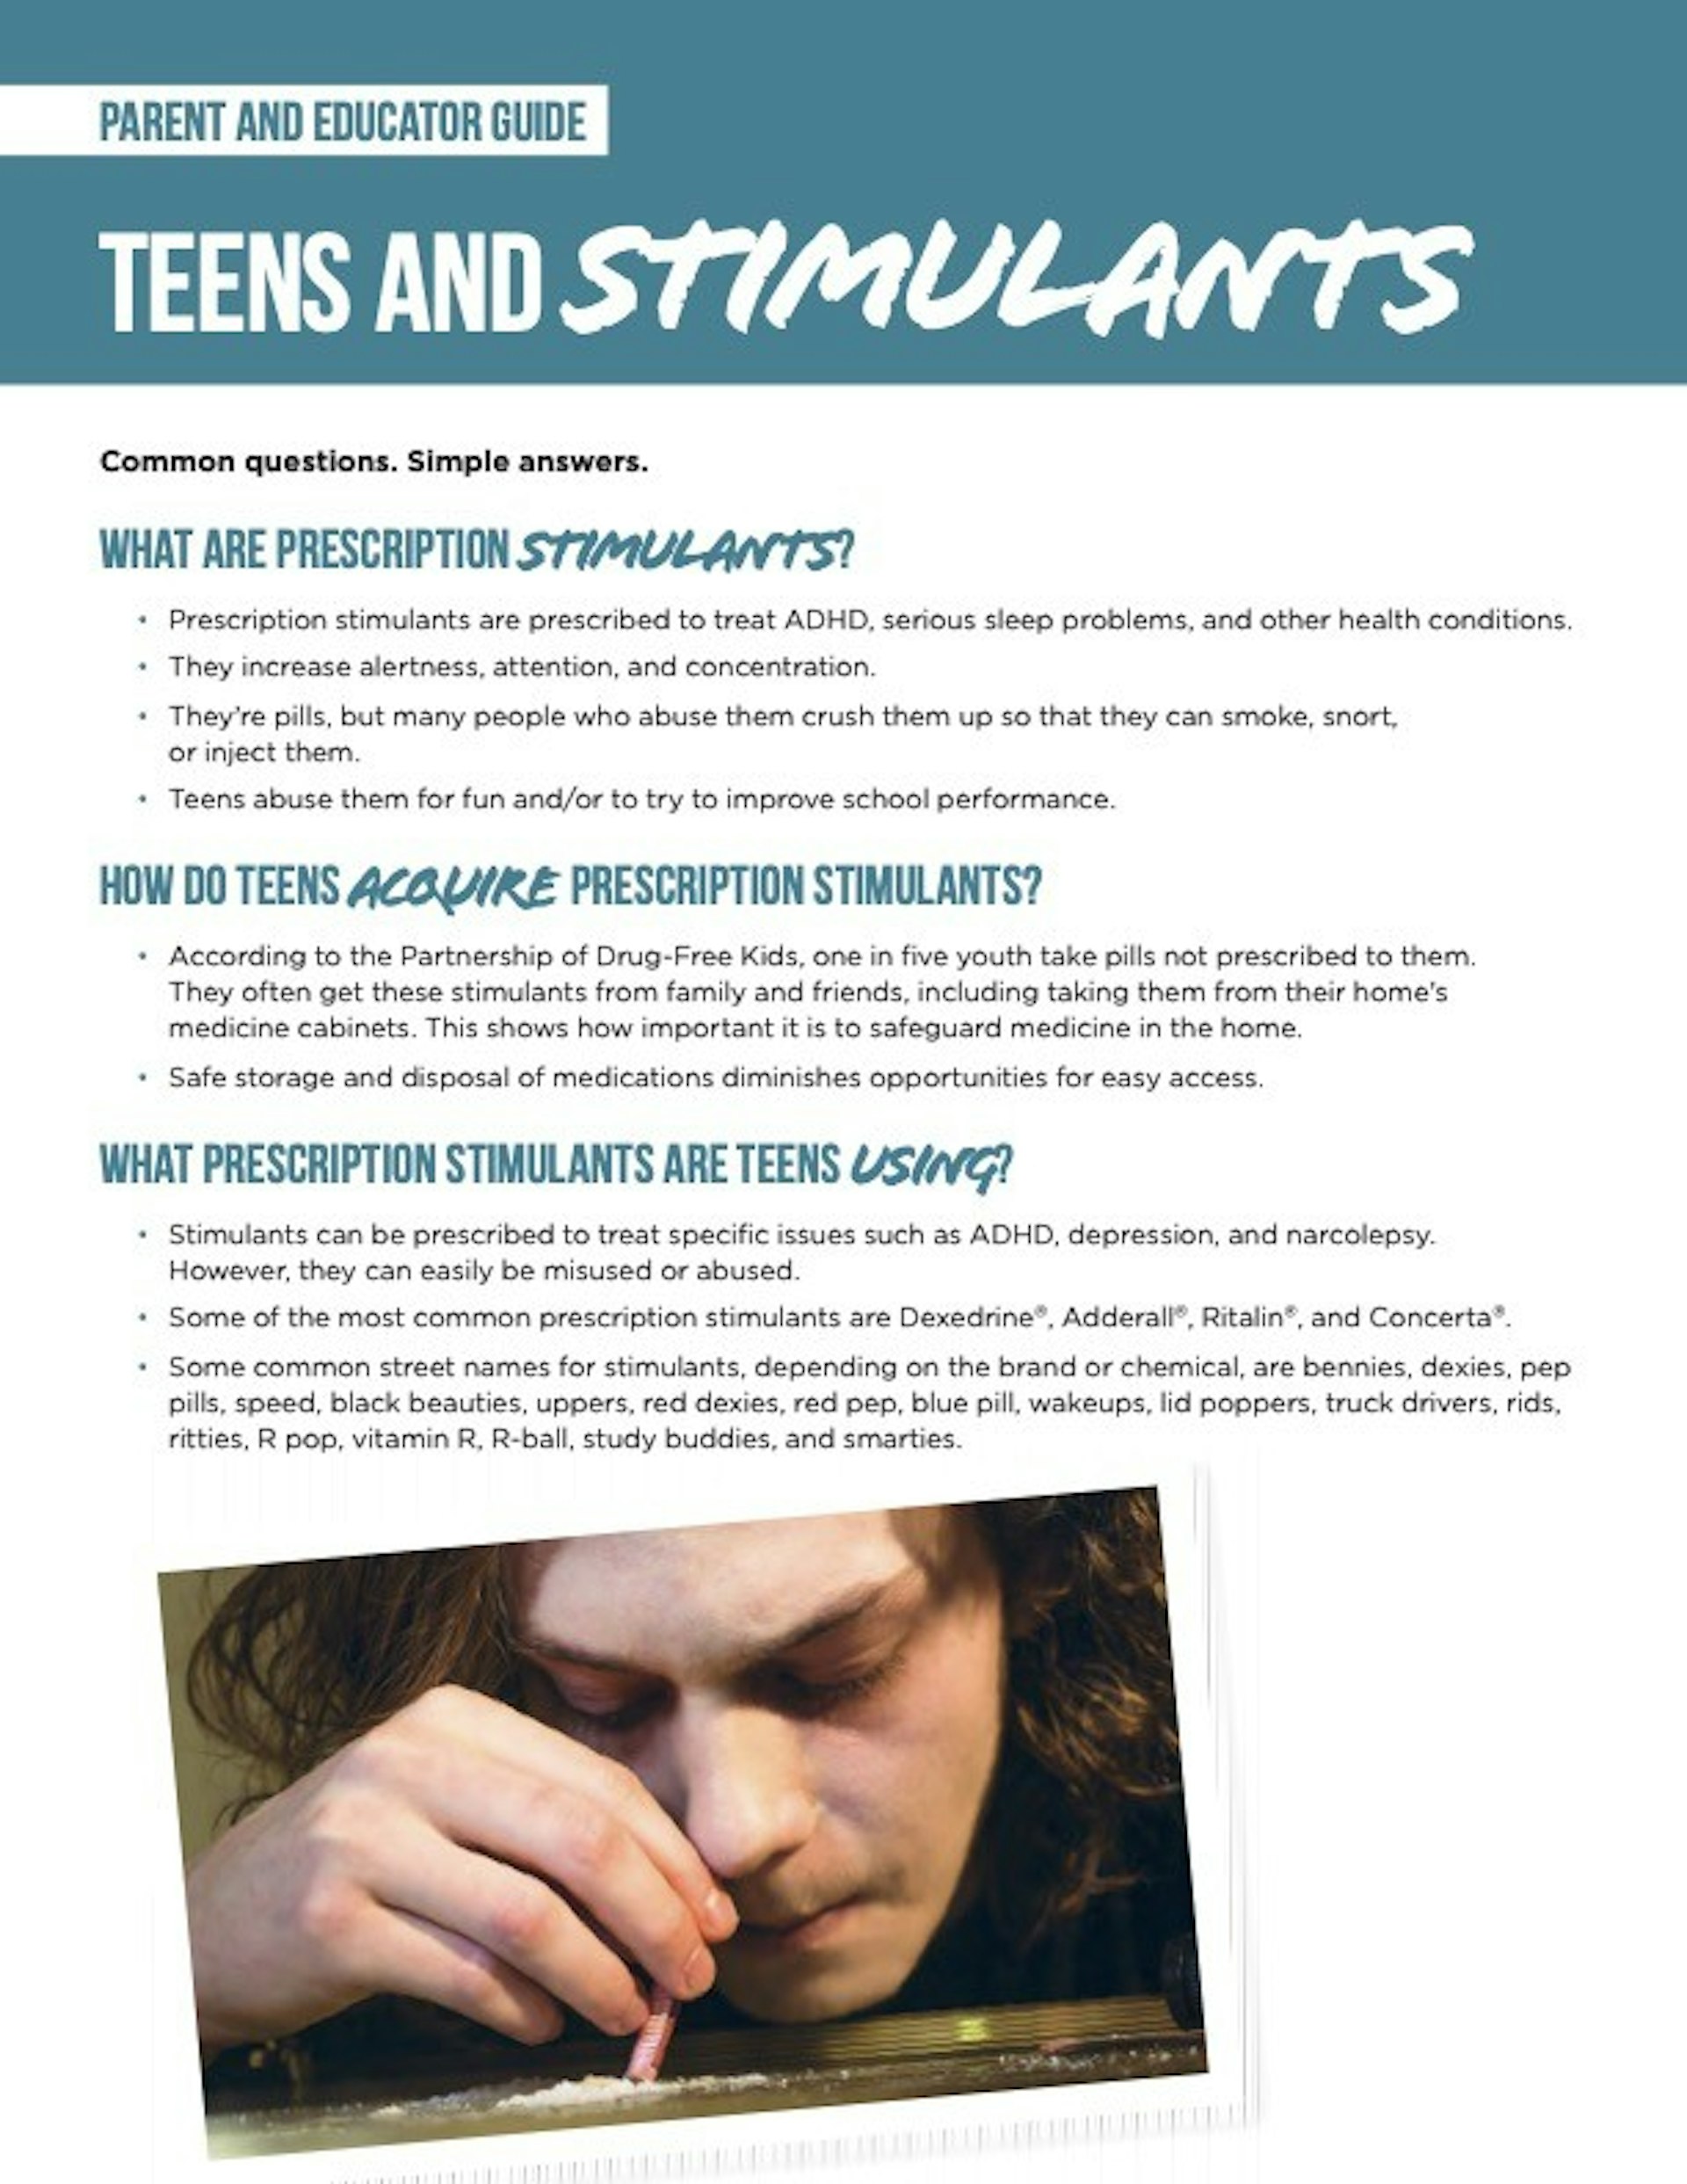 Teens and stimulants